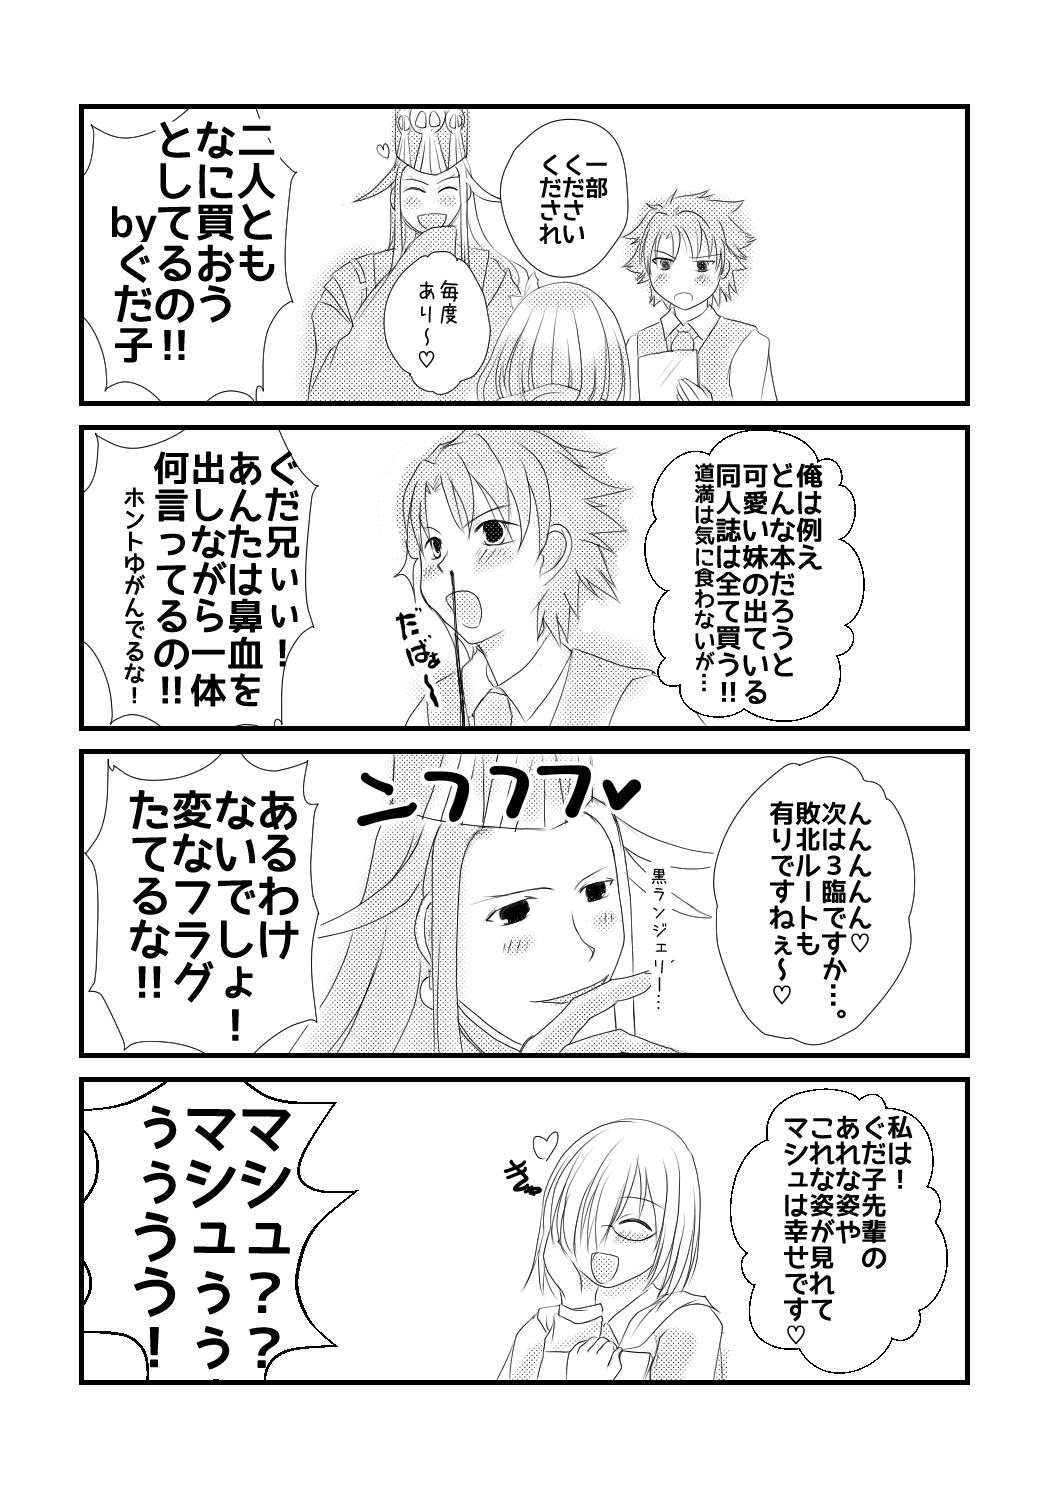 Doublepenetration ] Rin guda ♀ rakugaki guda yuru manga(Fate/Grand Order] - Fate grand order Massage - Page 7